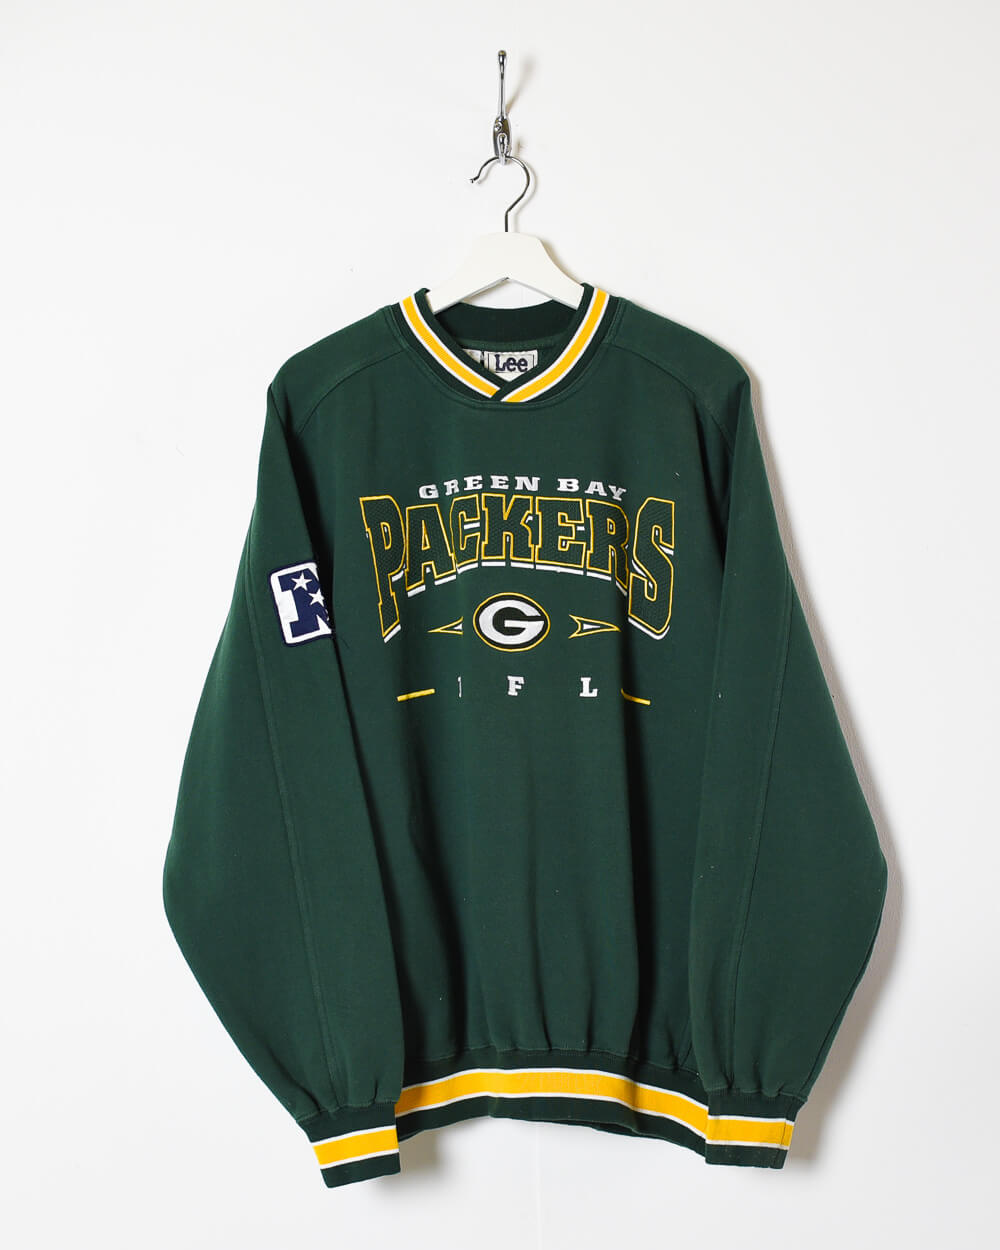 Vintage 90s Cotton Mix Green Lee Green Bay Packers Sweatshirt 